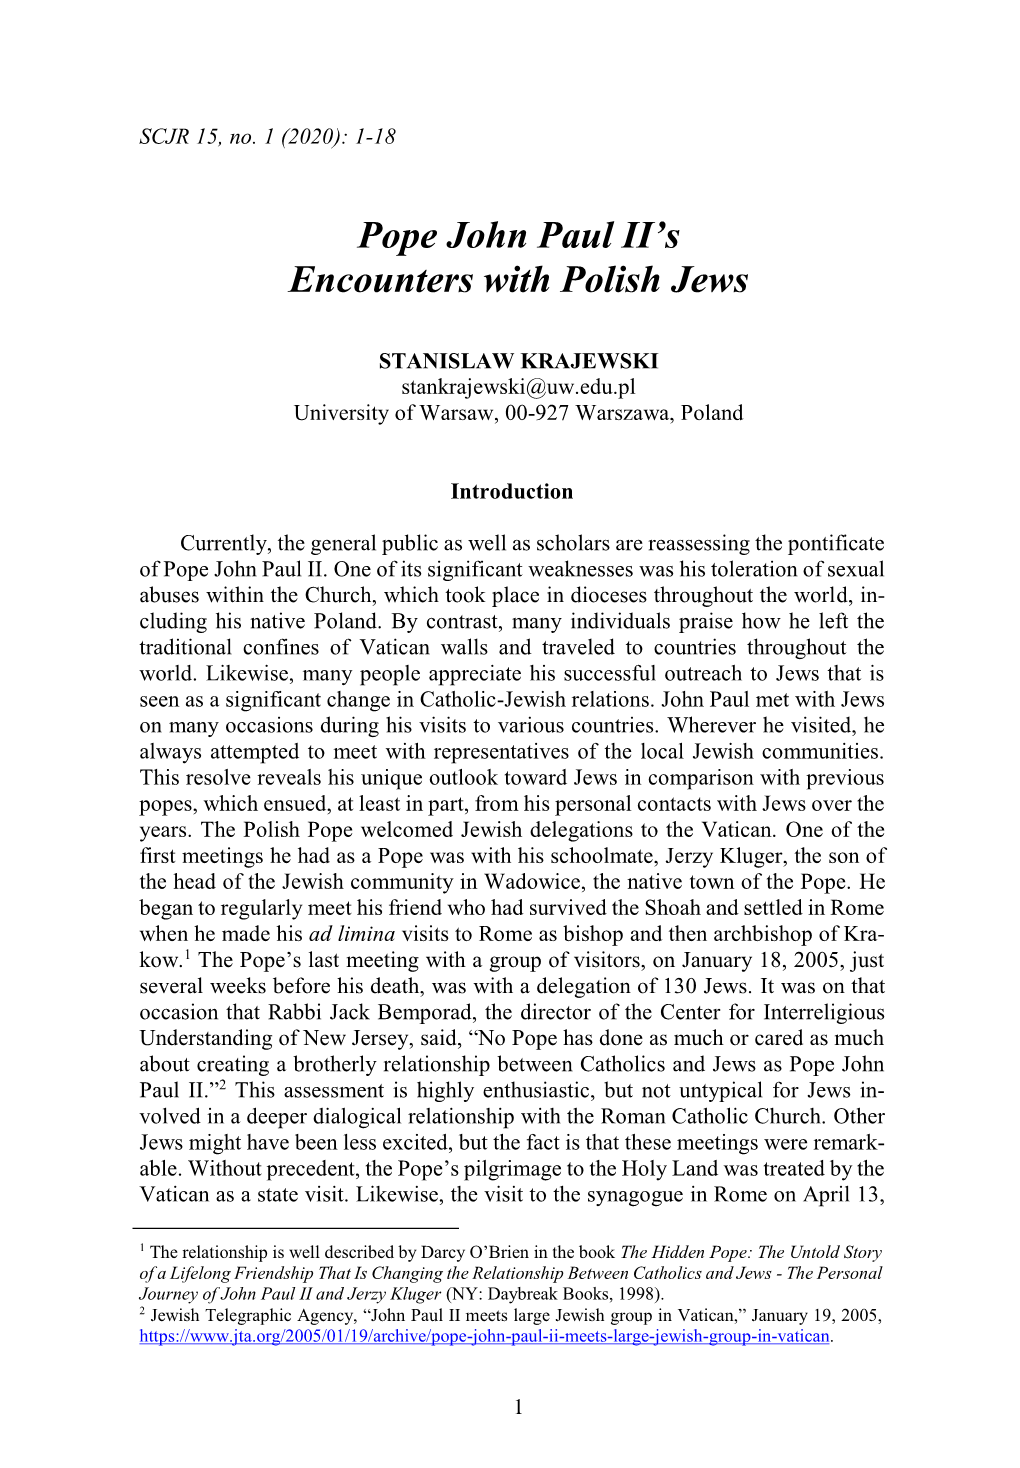 Pope John Paul II's Encounters with Polish Jews